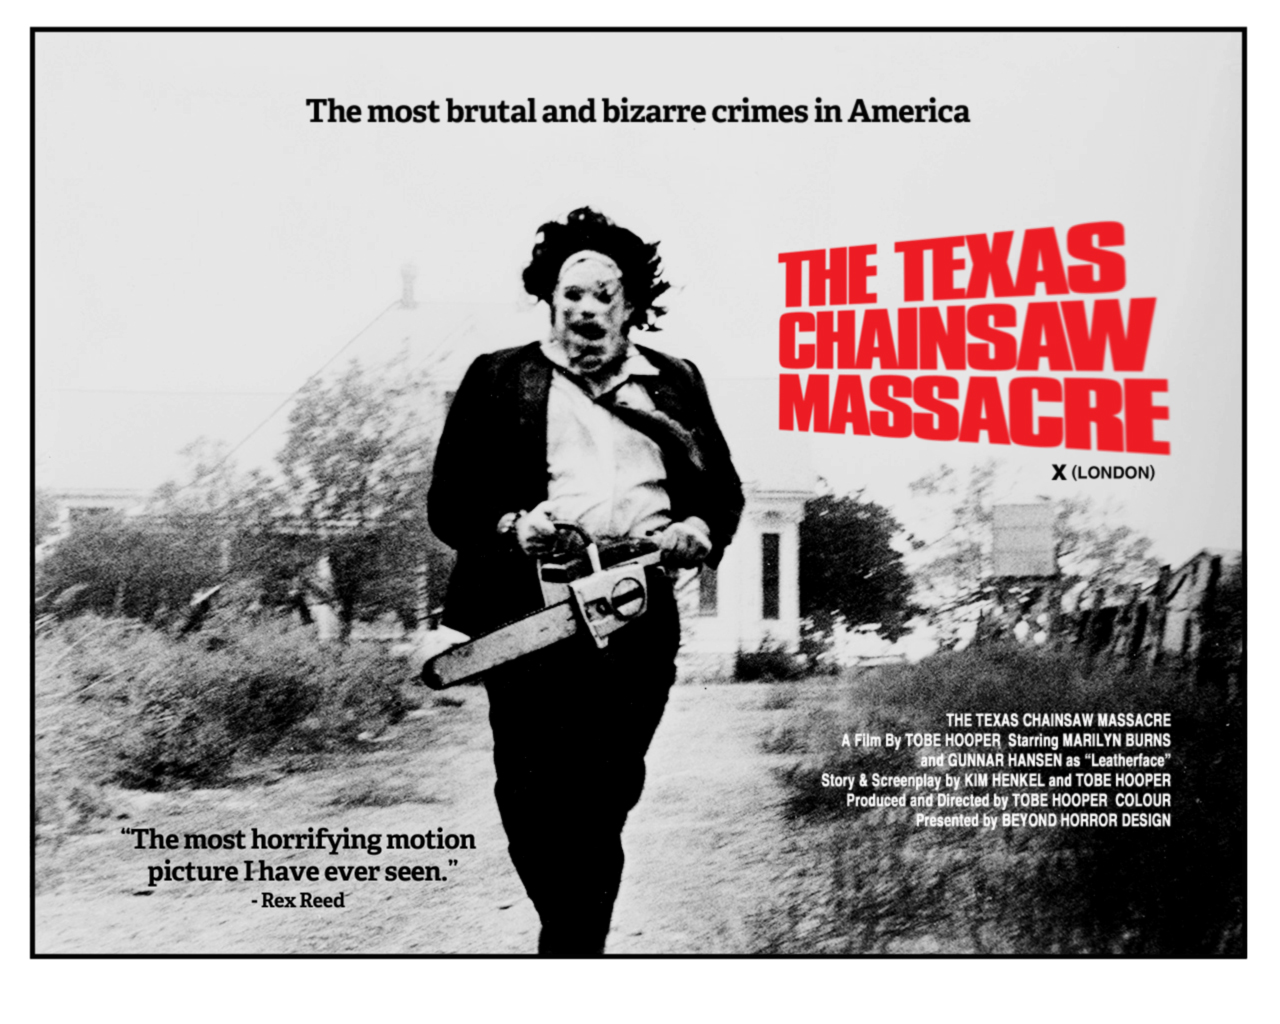 the_texas_chainsaw_massacre_1974_quad_3_beyond_horror_design.jpg